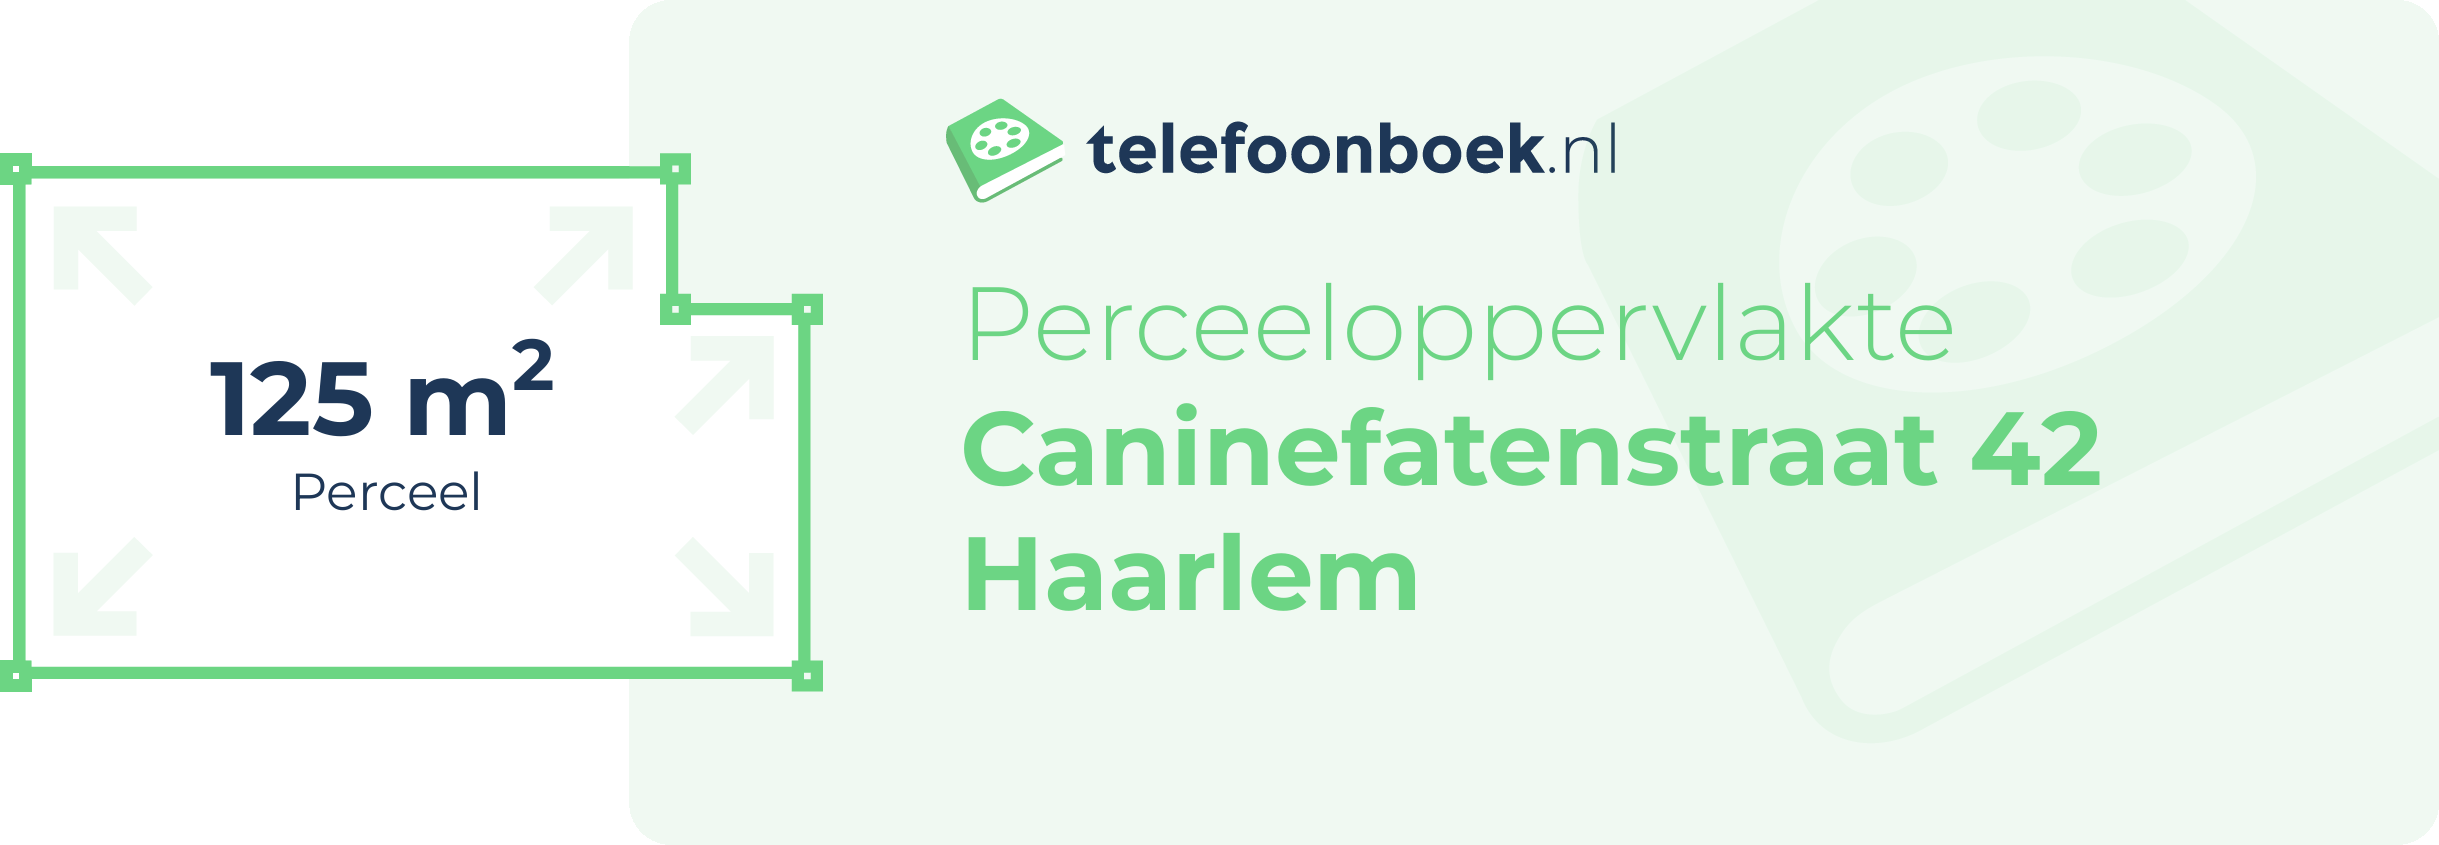 Perceeloppervlakte Caninefatenstraat 42 Haarlem